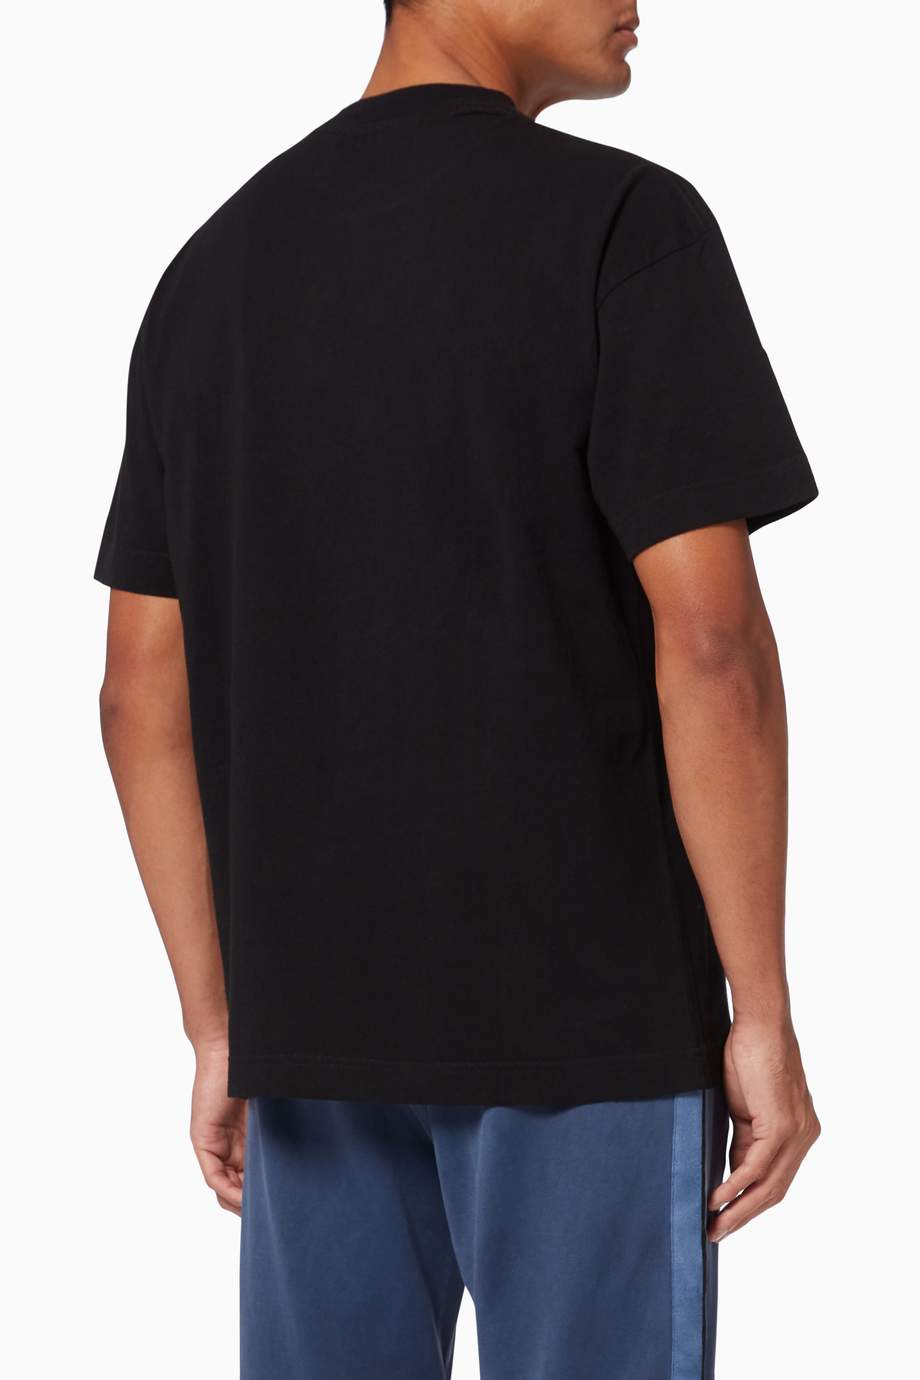 Shop Palm Angels Black Gothic Logo Cotton T-Shirt for Men | Ounass UAE